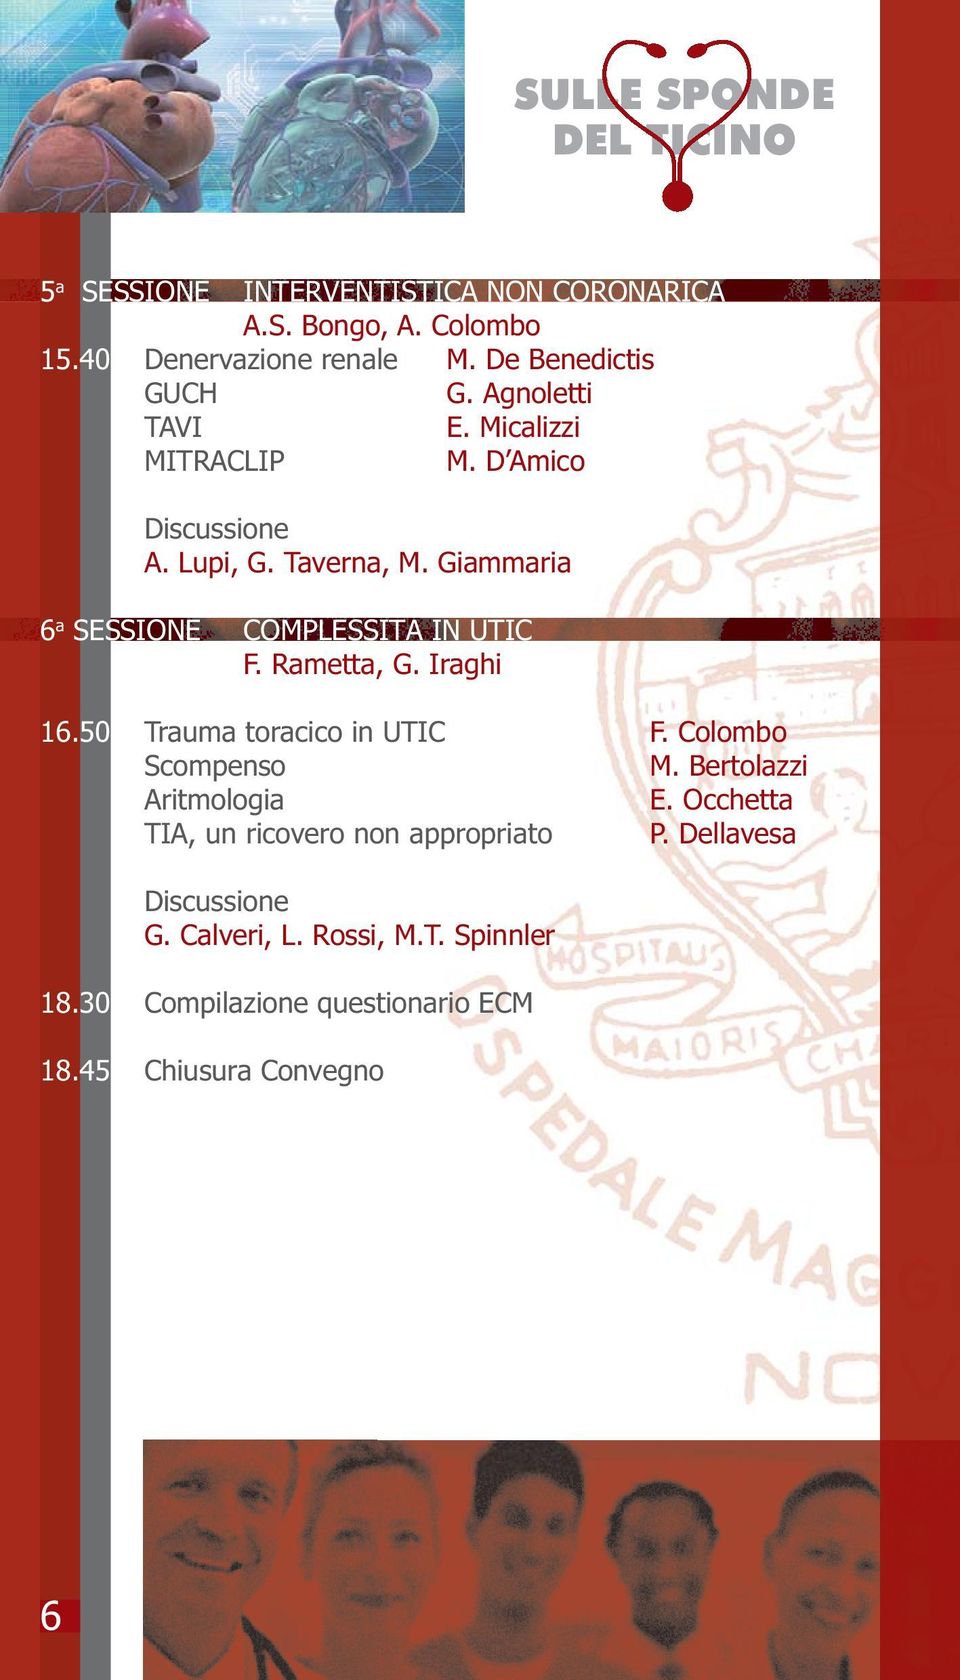 Giammaria 6 a SESSIONE COMPLESSITÀ IN UTIC F. Rametta, G. Iraghi 16.50 Trauma toracico in UTIC F. Colombo Scompenso M.